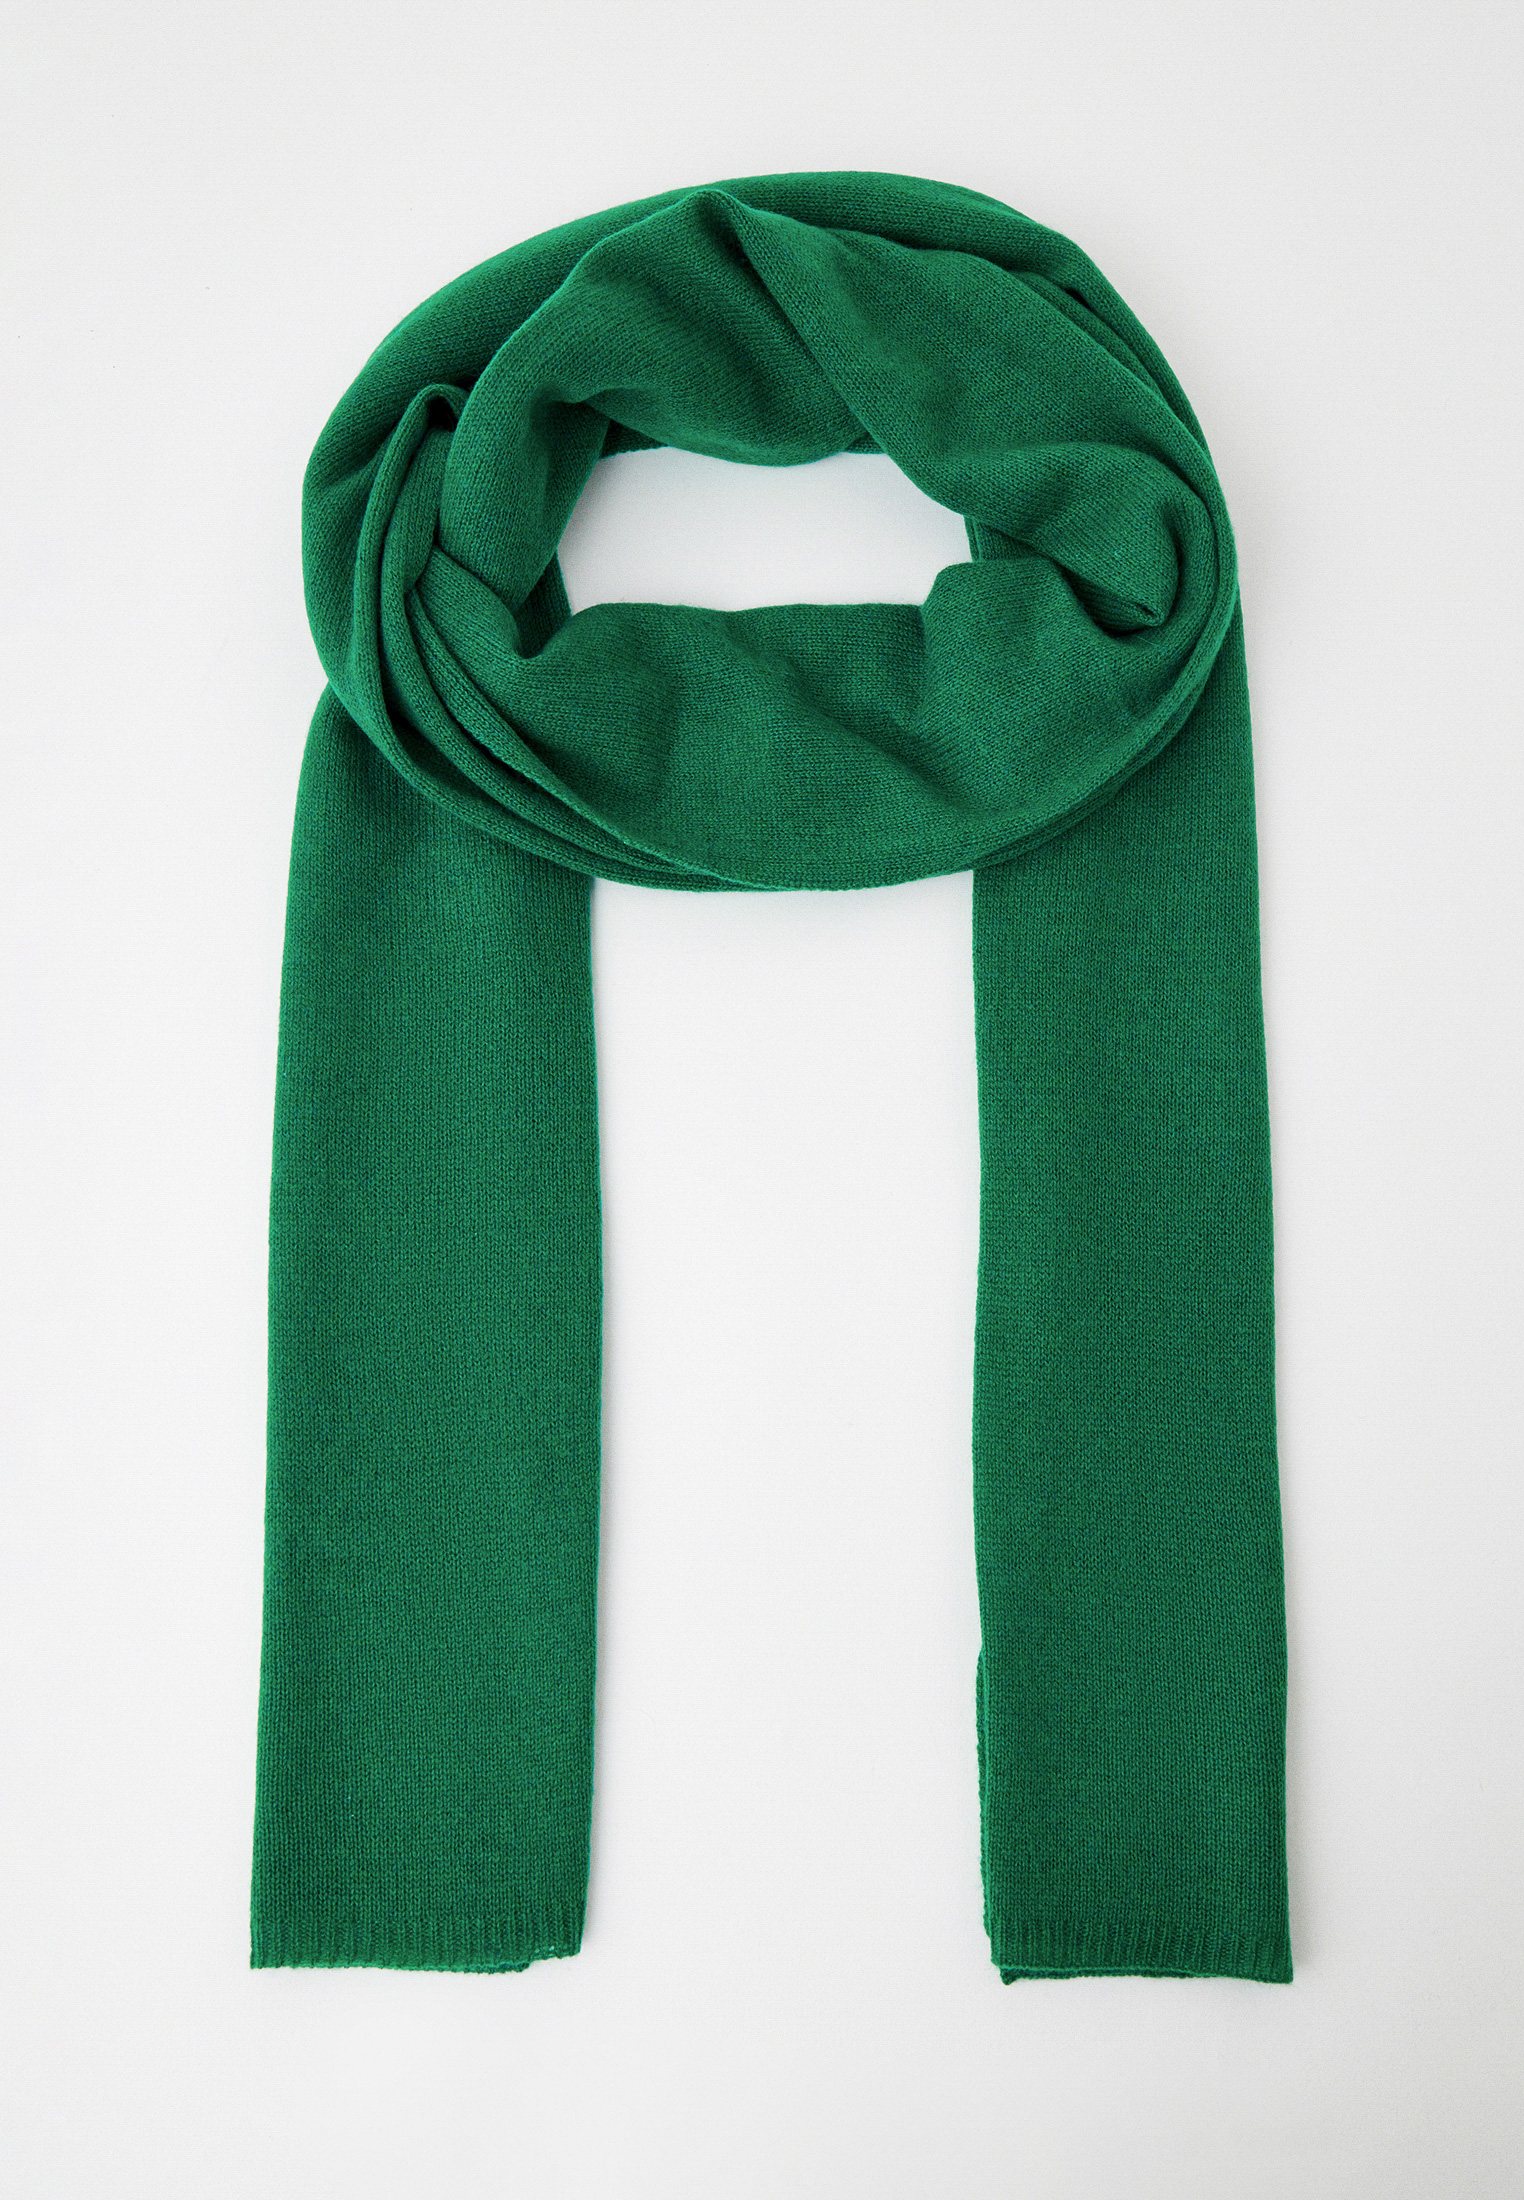 Шарф, зелёный. Шарф зелено серый. Зеленый шарфик. Зеленый шарф зима. Красно зеленый шарф